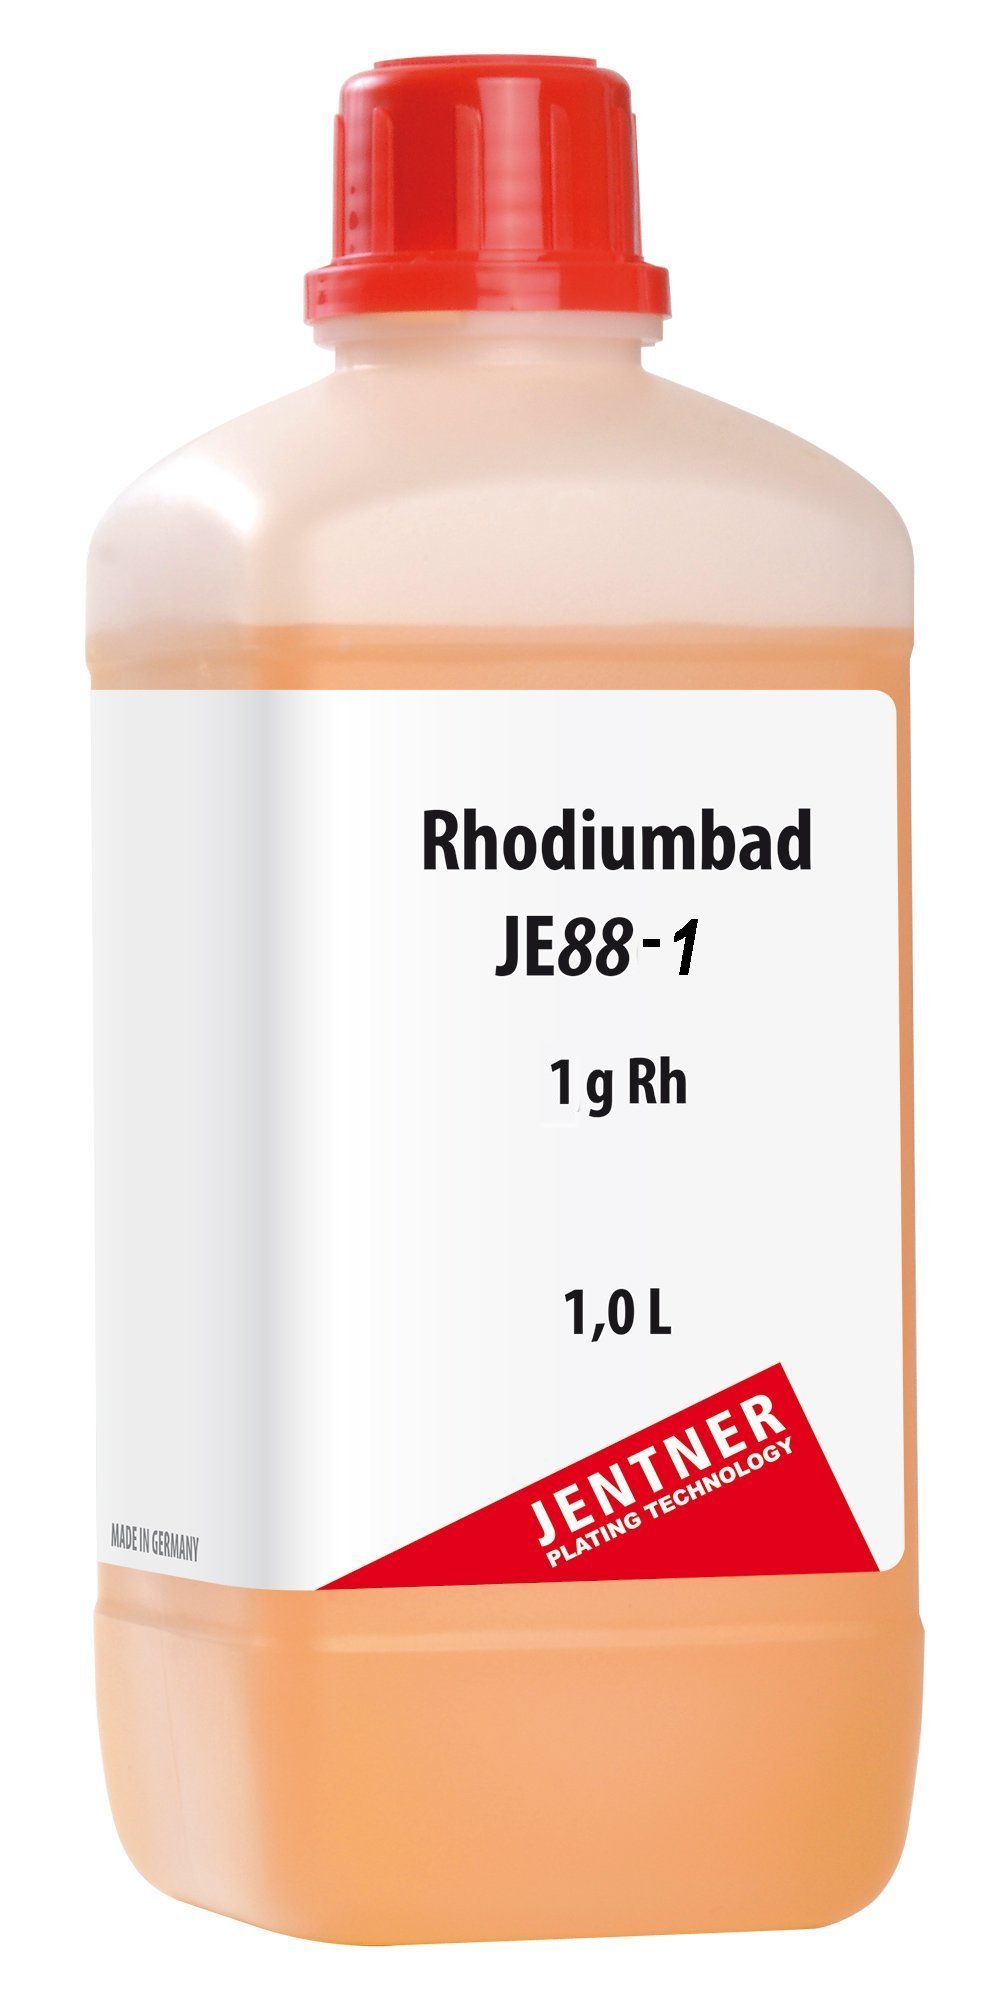 Rhodium bath JE88-1 GO! - 1 g/L Rh